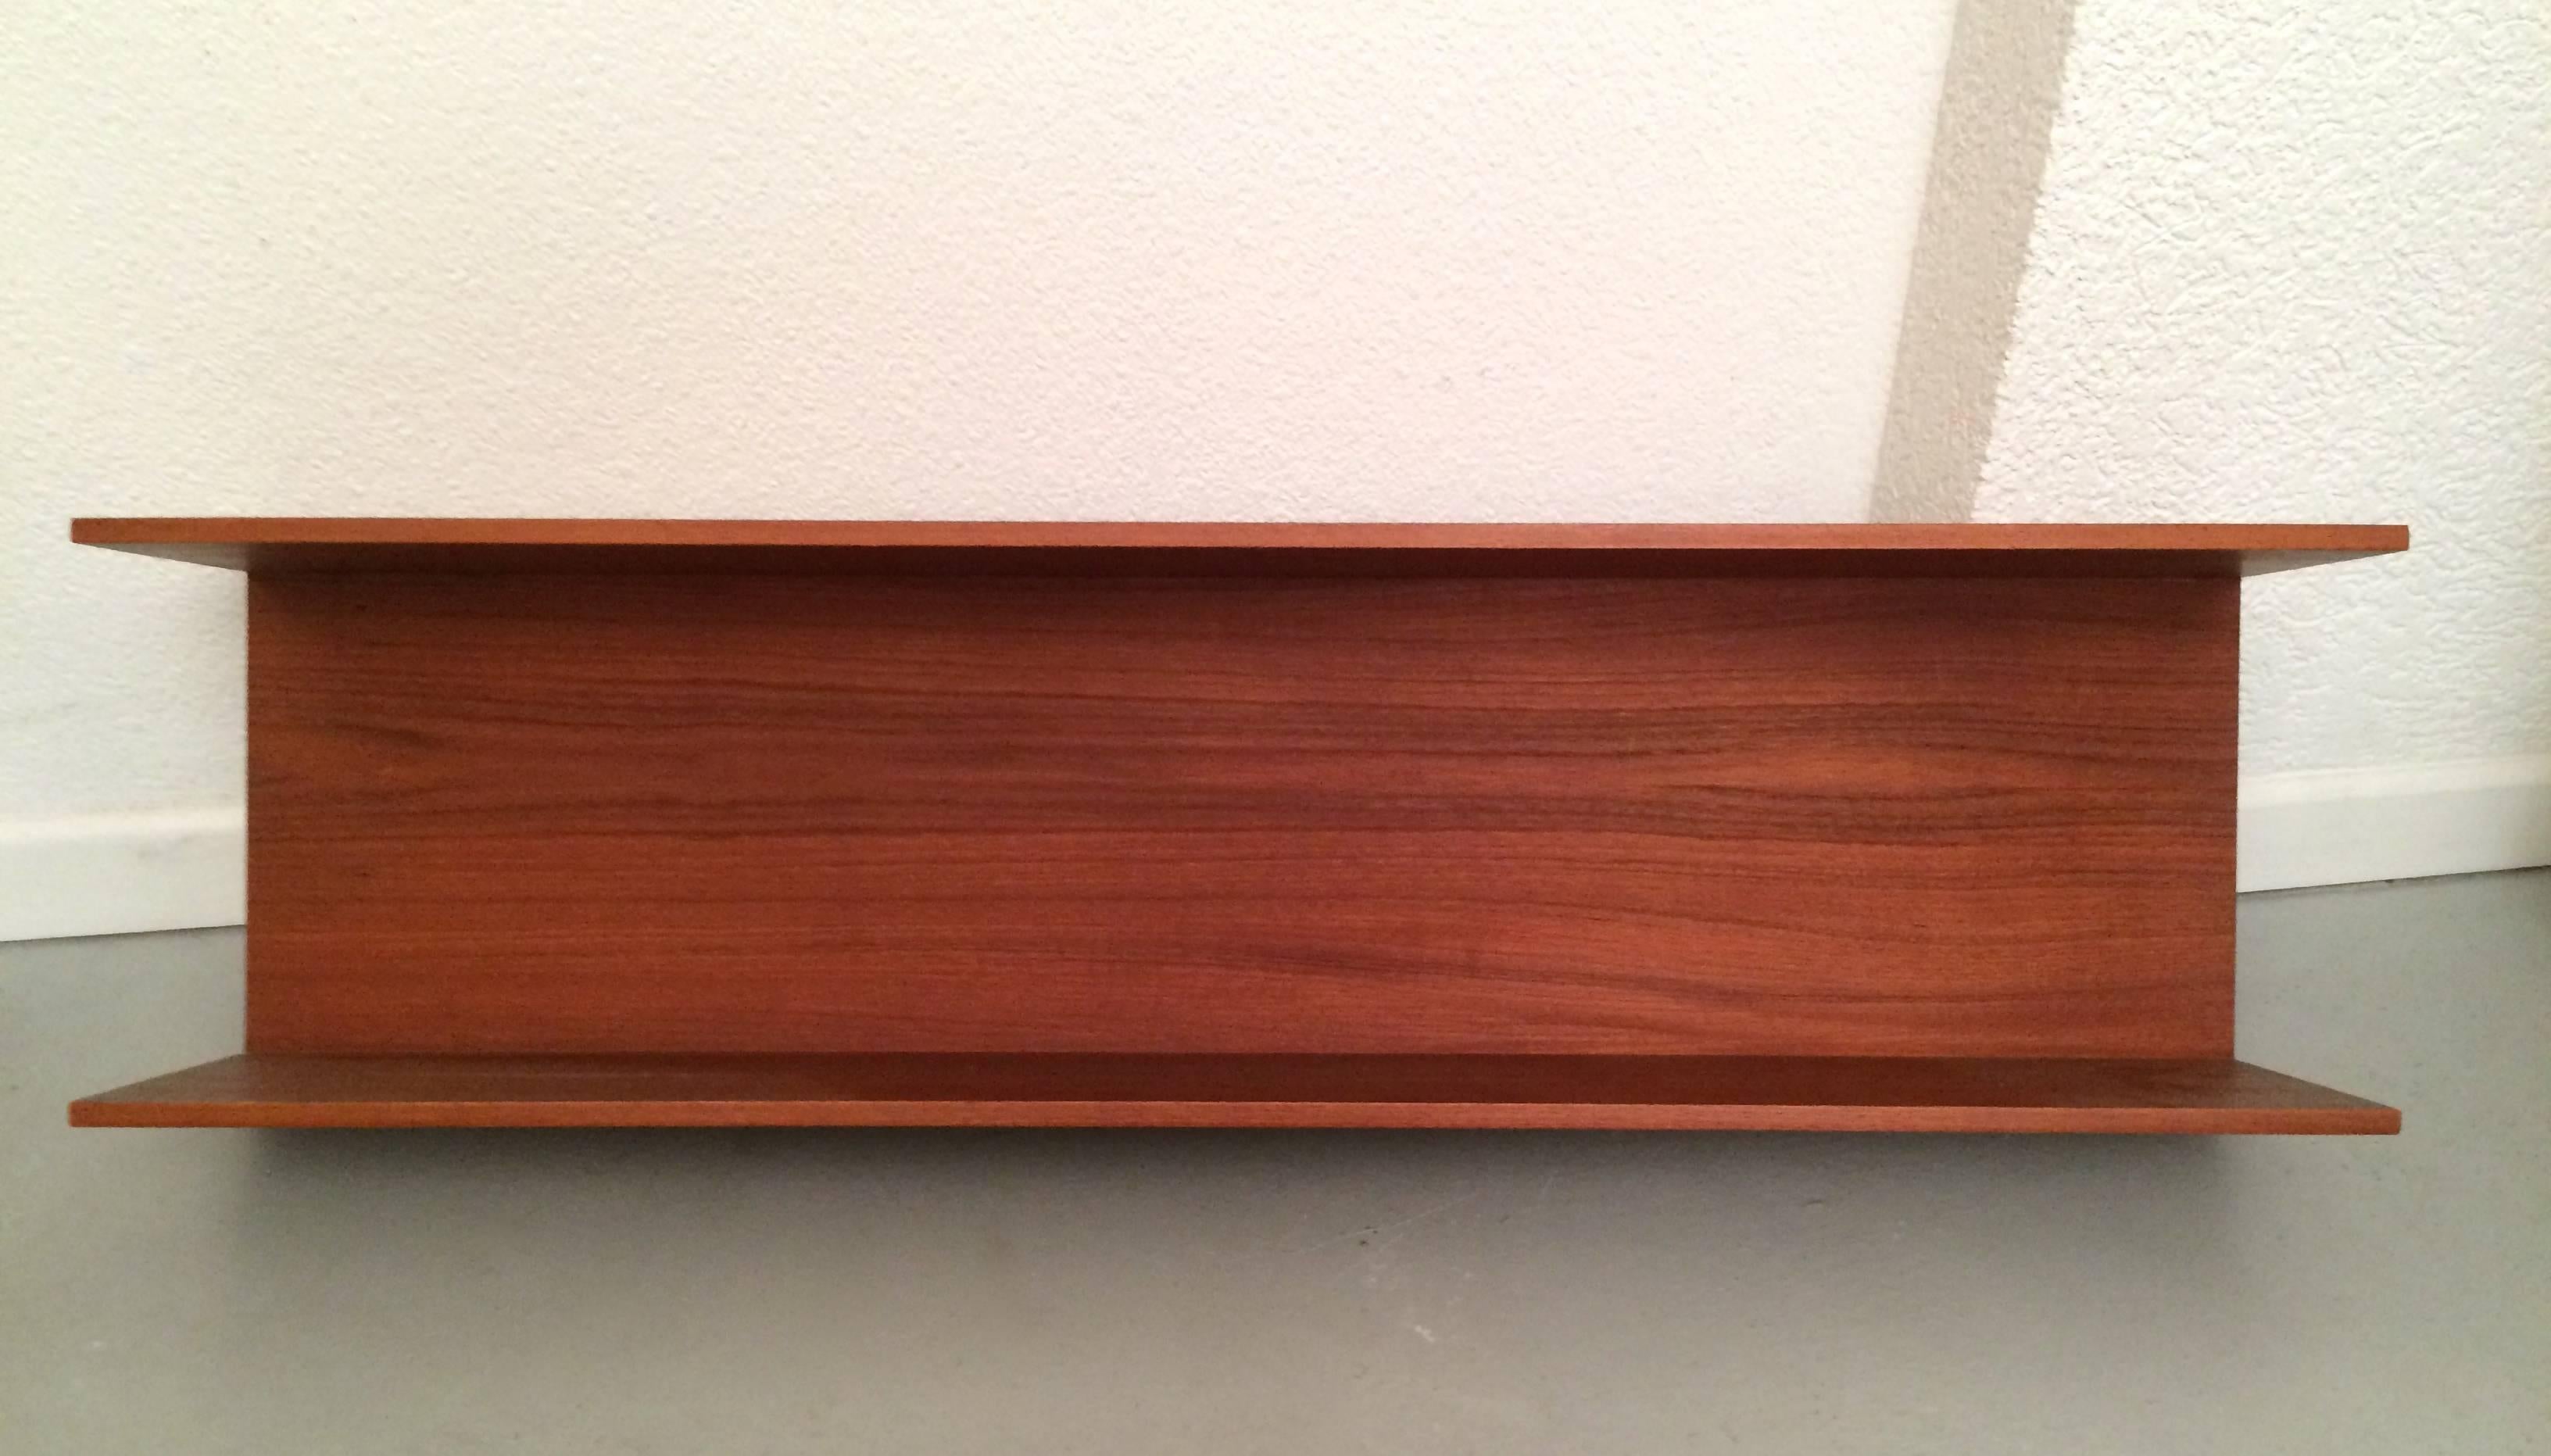 Teak shelf by Walter Wirz.
Very nice vintage condition.